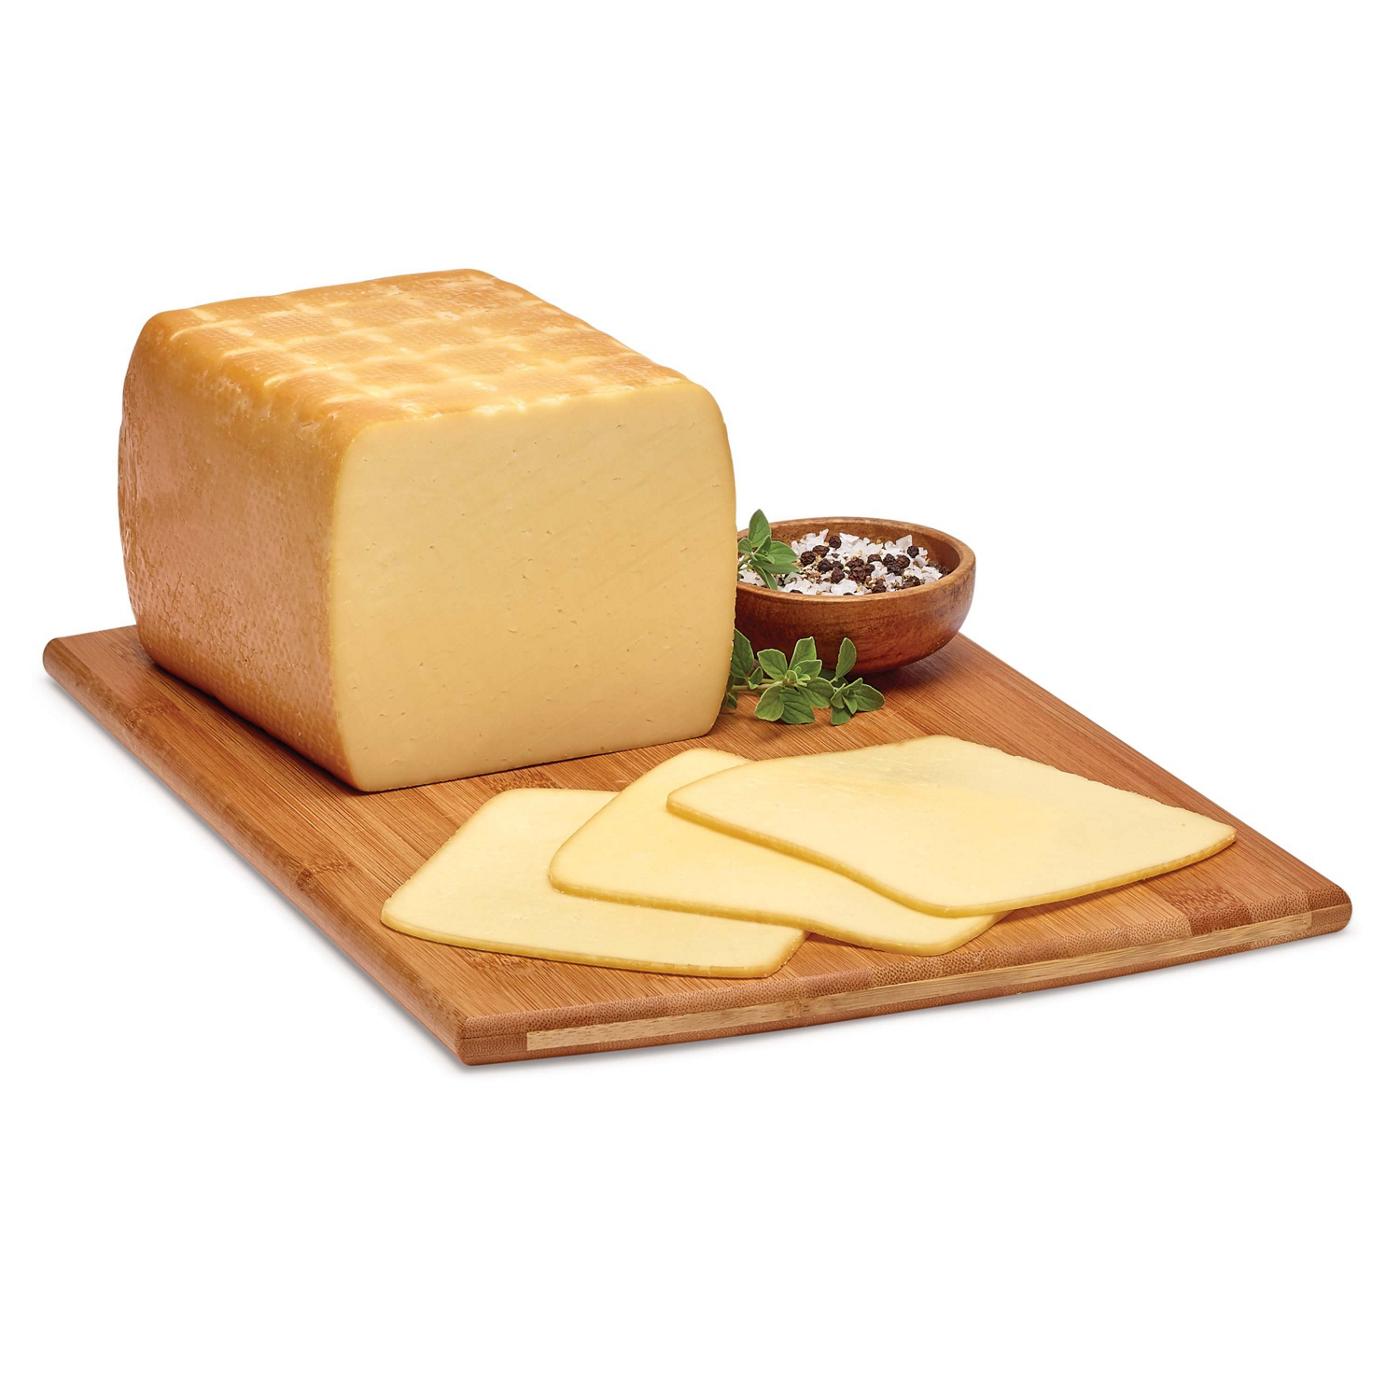 H-E-B Deli Sliced Post Oak Smoked Muenster Cheese; image 1 of 2